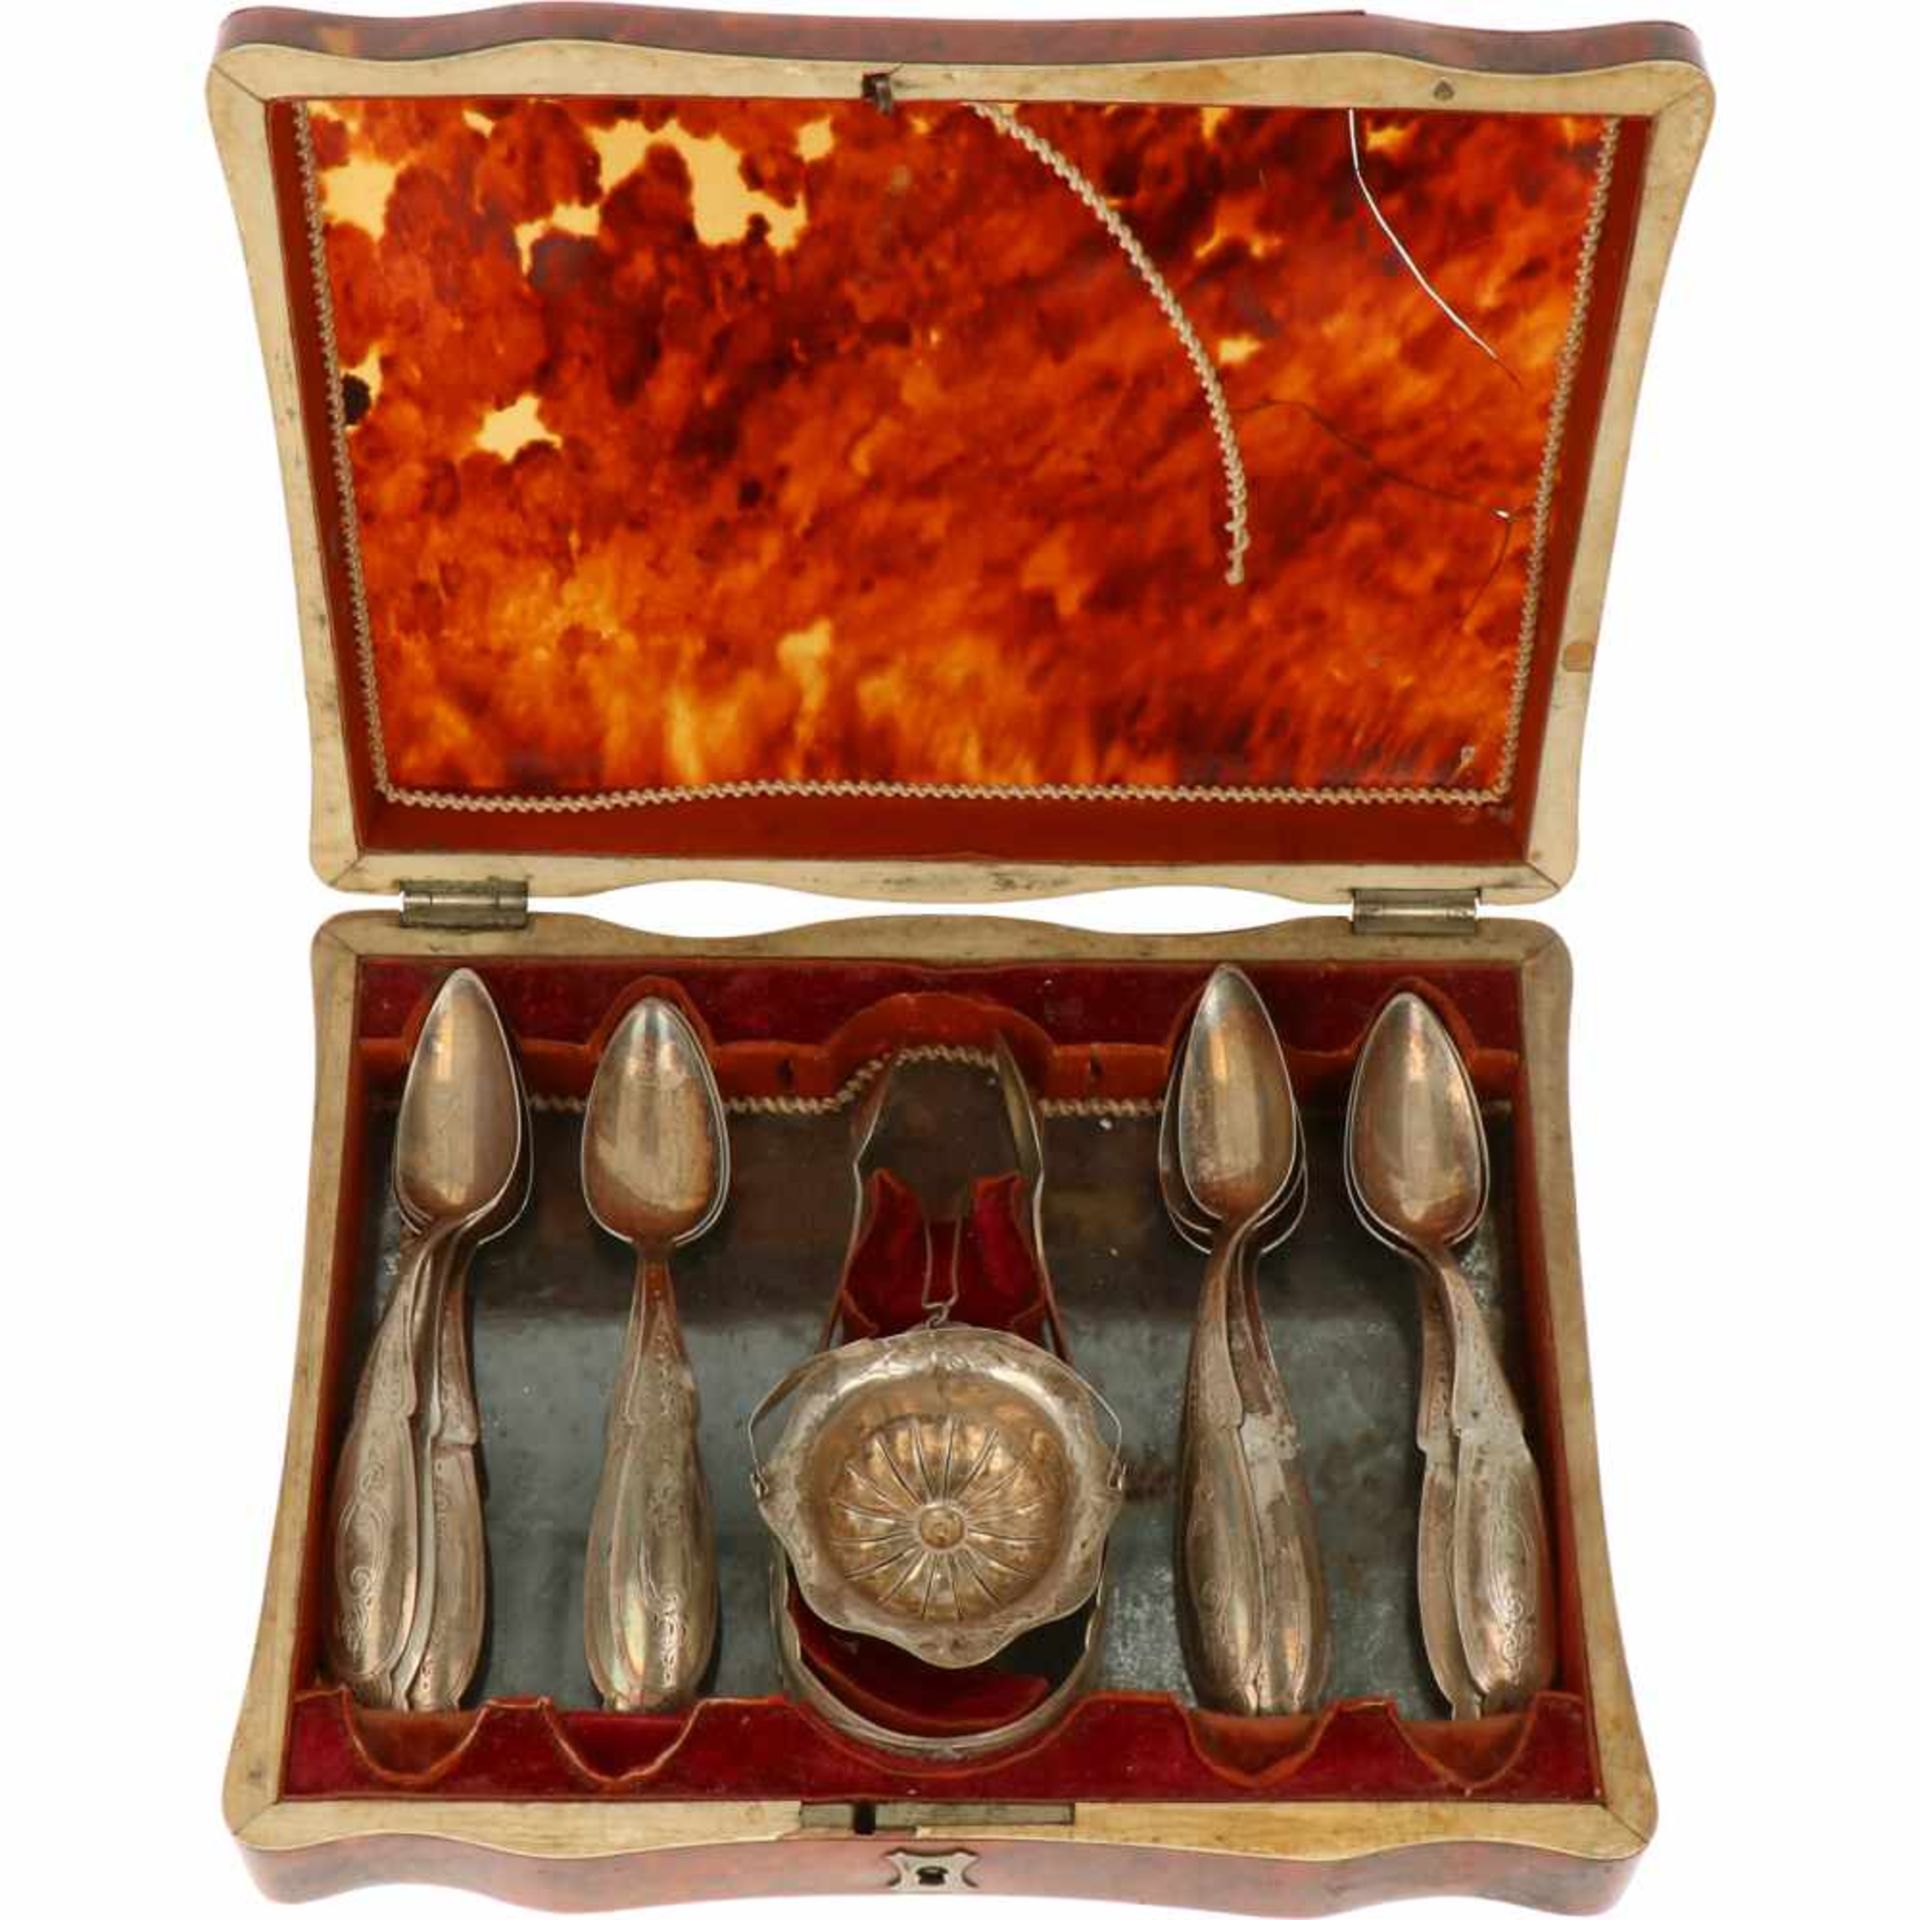 (13) Piece set of silver teaspoons in tortoise case.